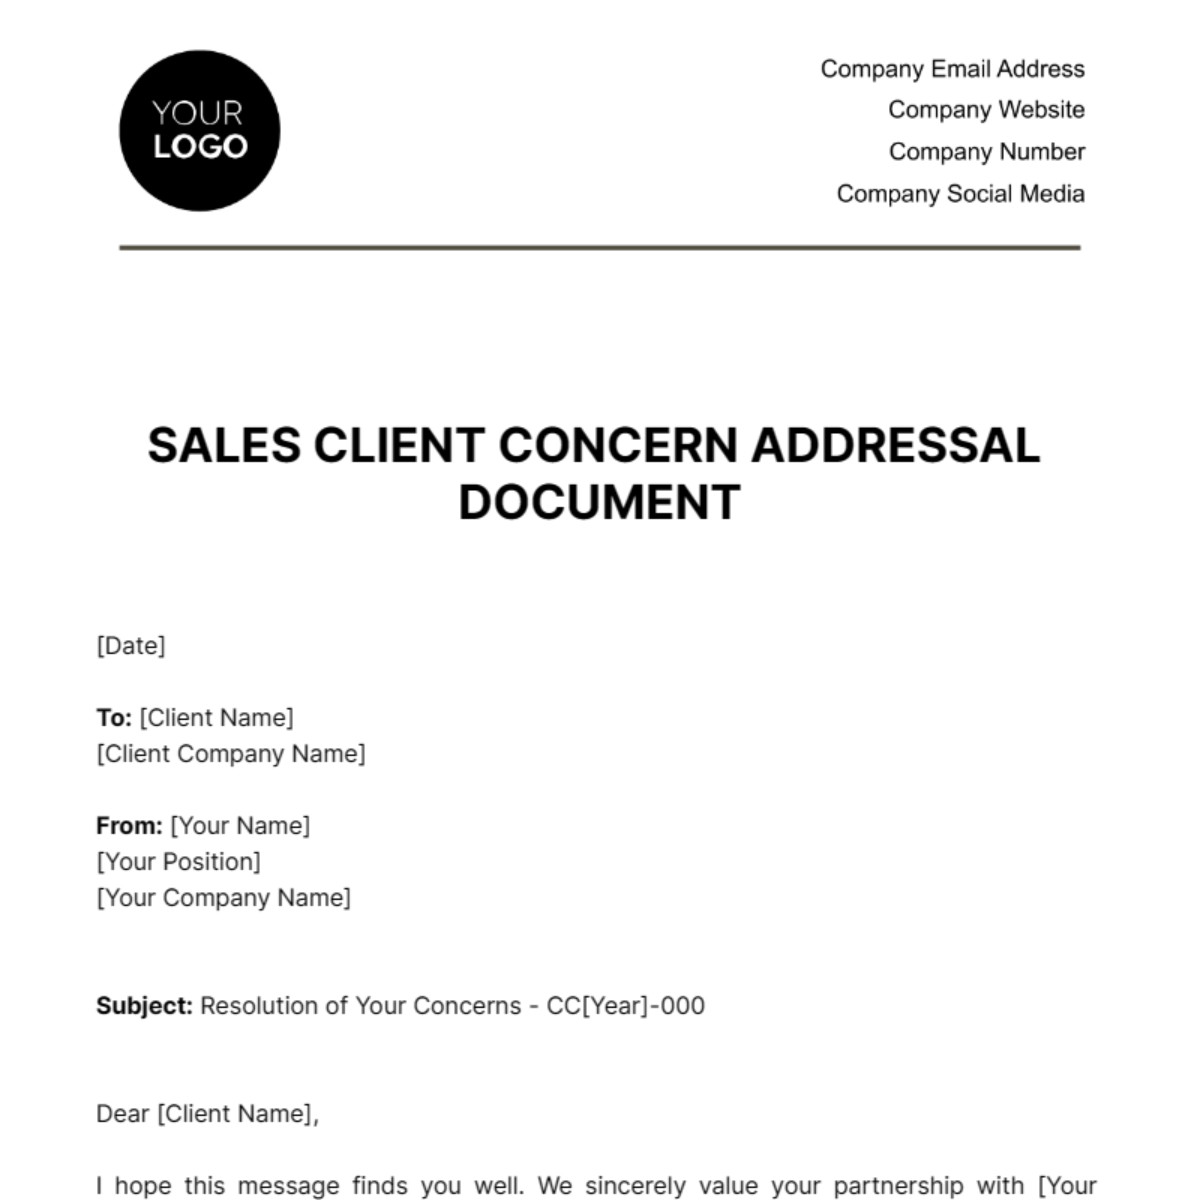 Sales Client Concern Addressal Document Template